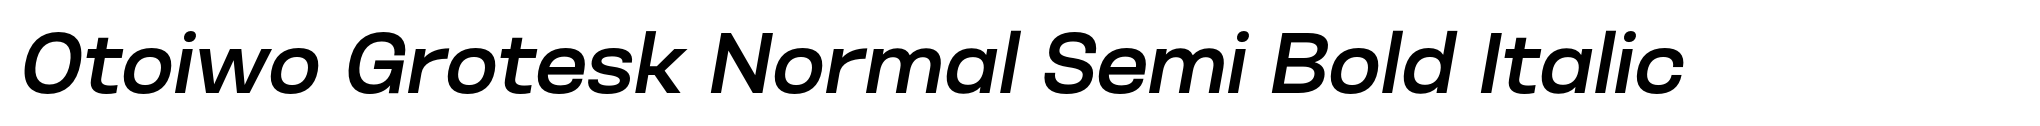 Otoiwo Grotesk Normal Semi Bold Italic image